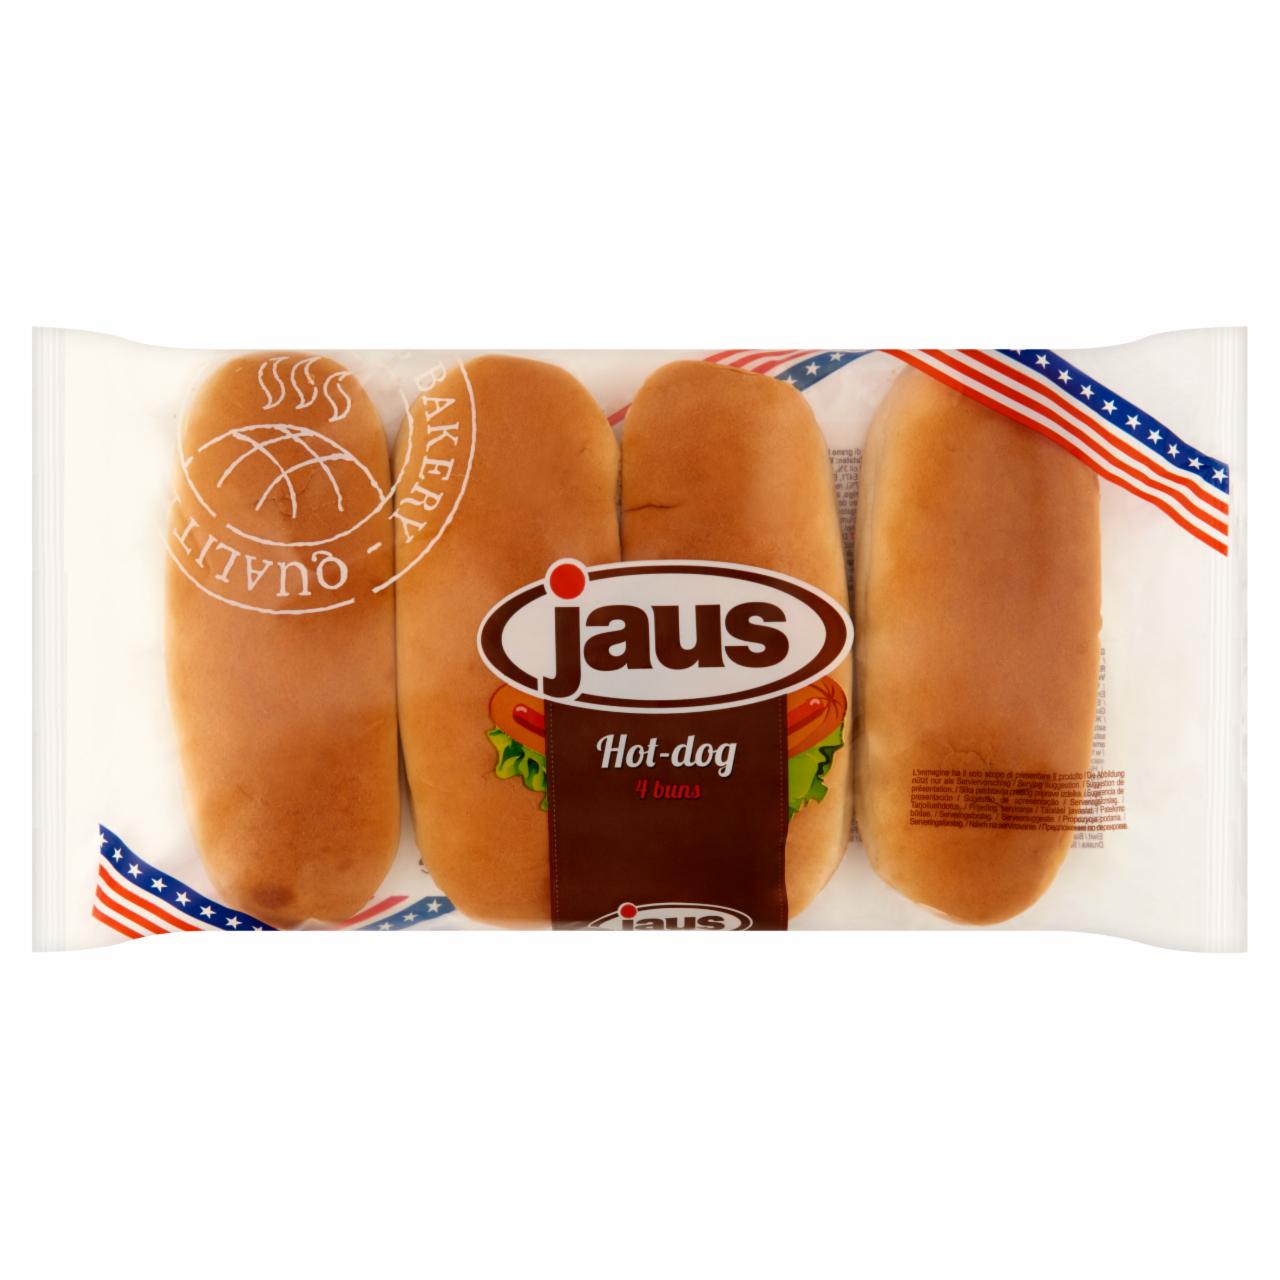 Képek - Jaus hot dog kifli 4 x 62,5 g (250 g)